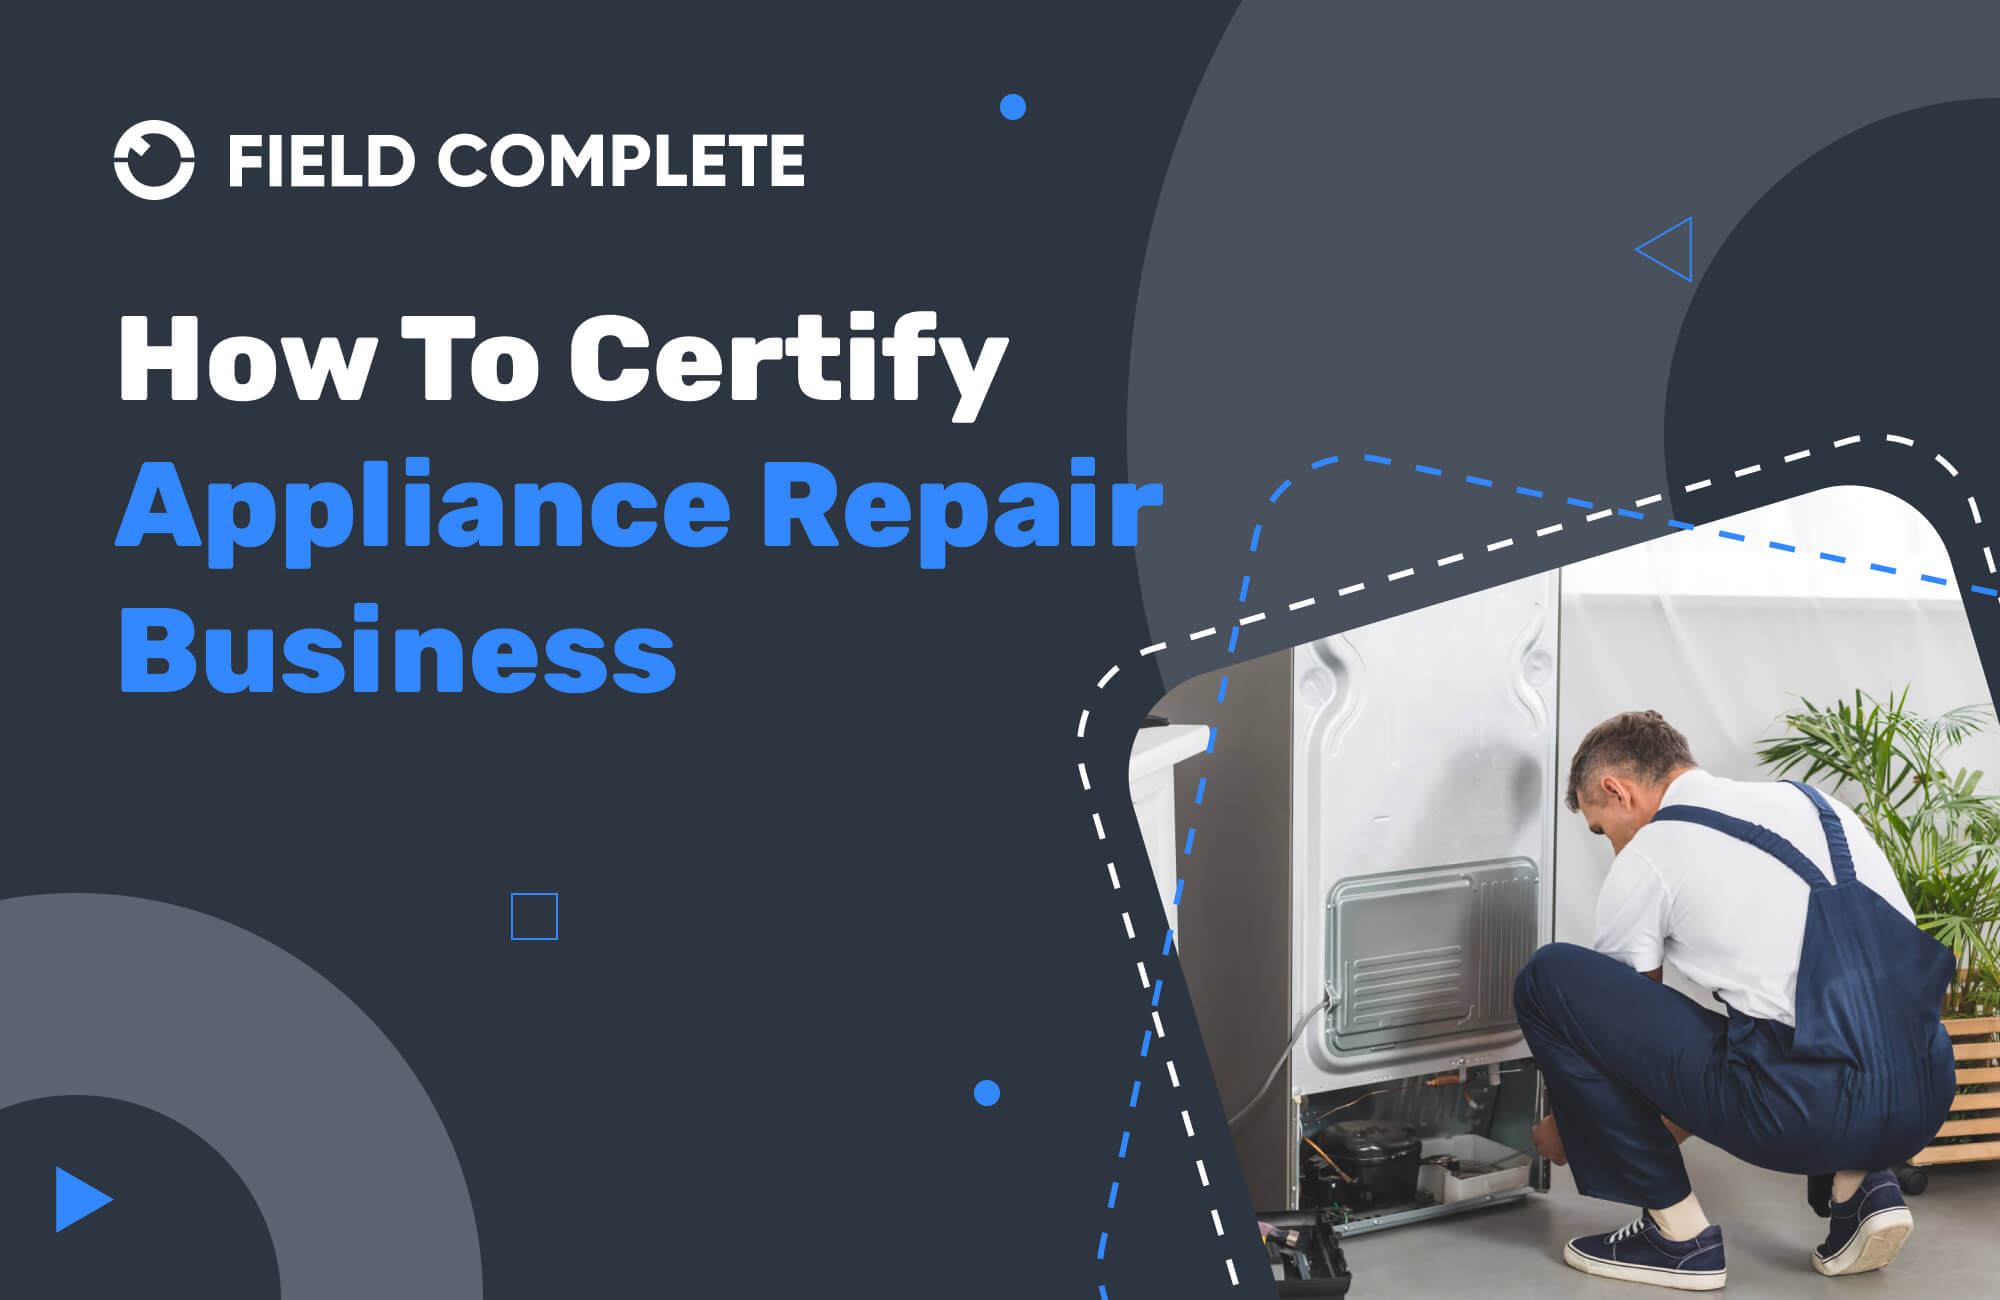 Dependable Refrigeration & Appliance Repair Service Sub Zero Freezer Repair